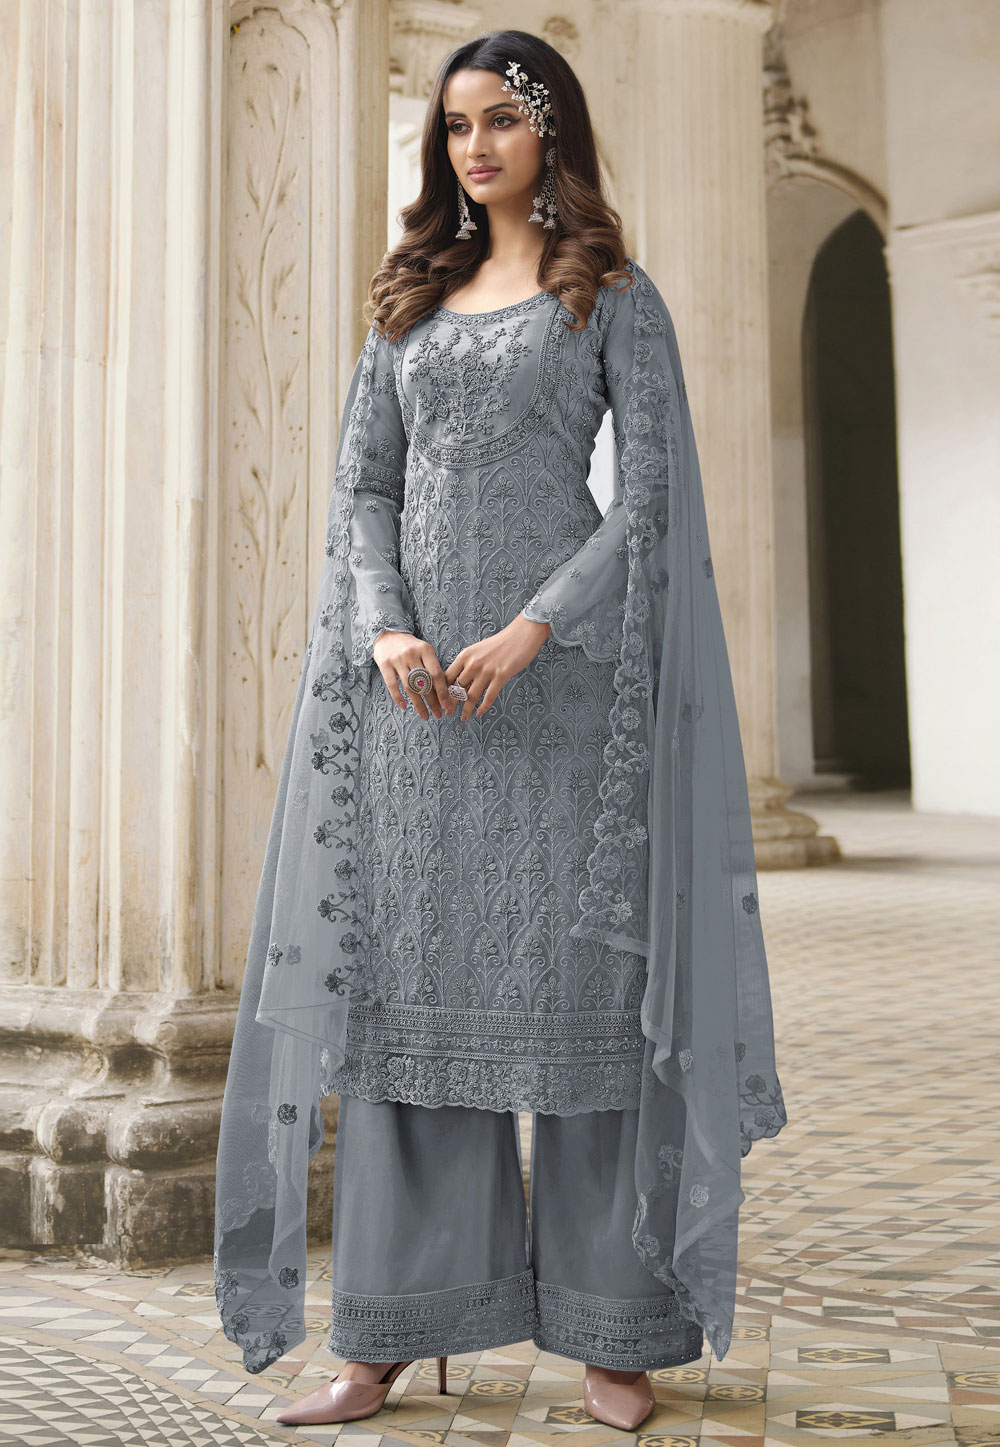 Buy Latest Pakistani Suits - Salwar Kameez for Women Online | Salwari